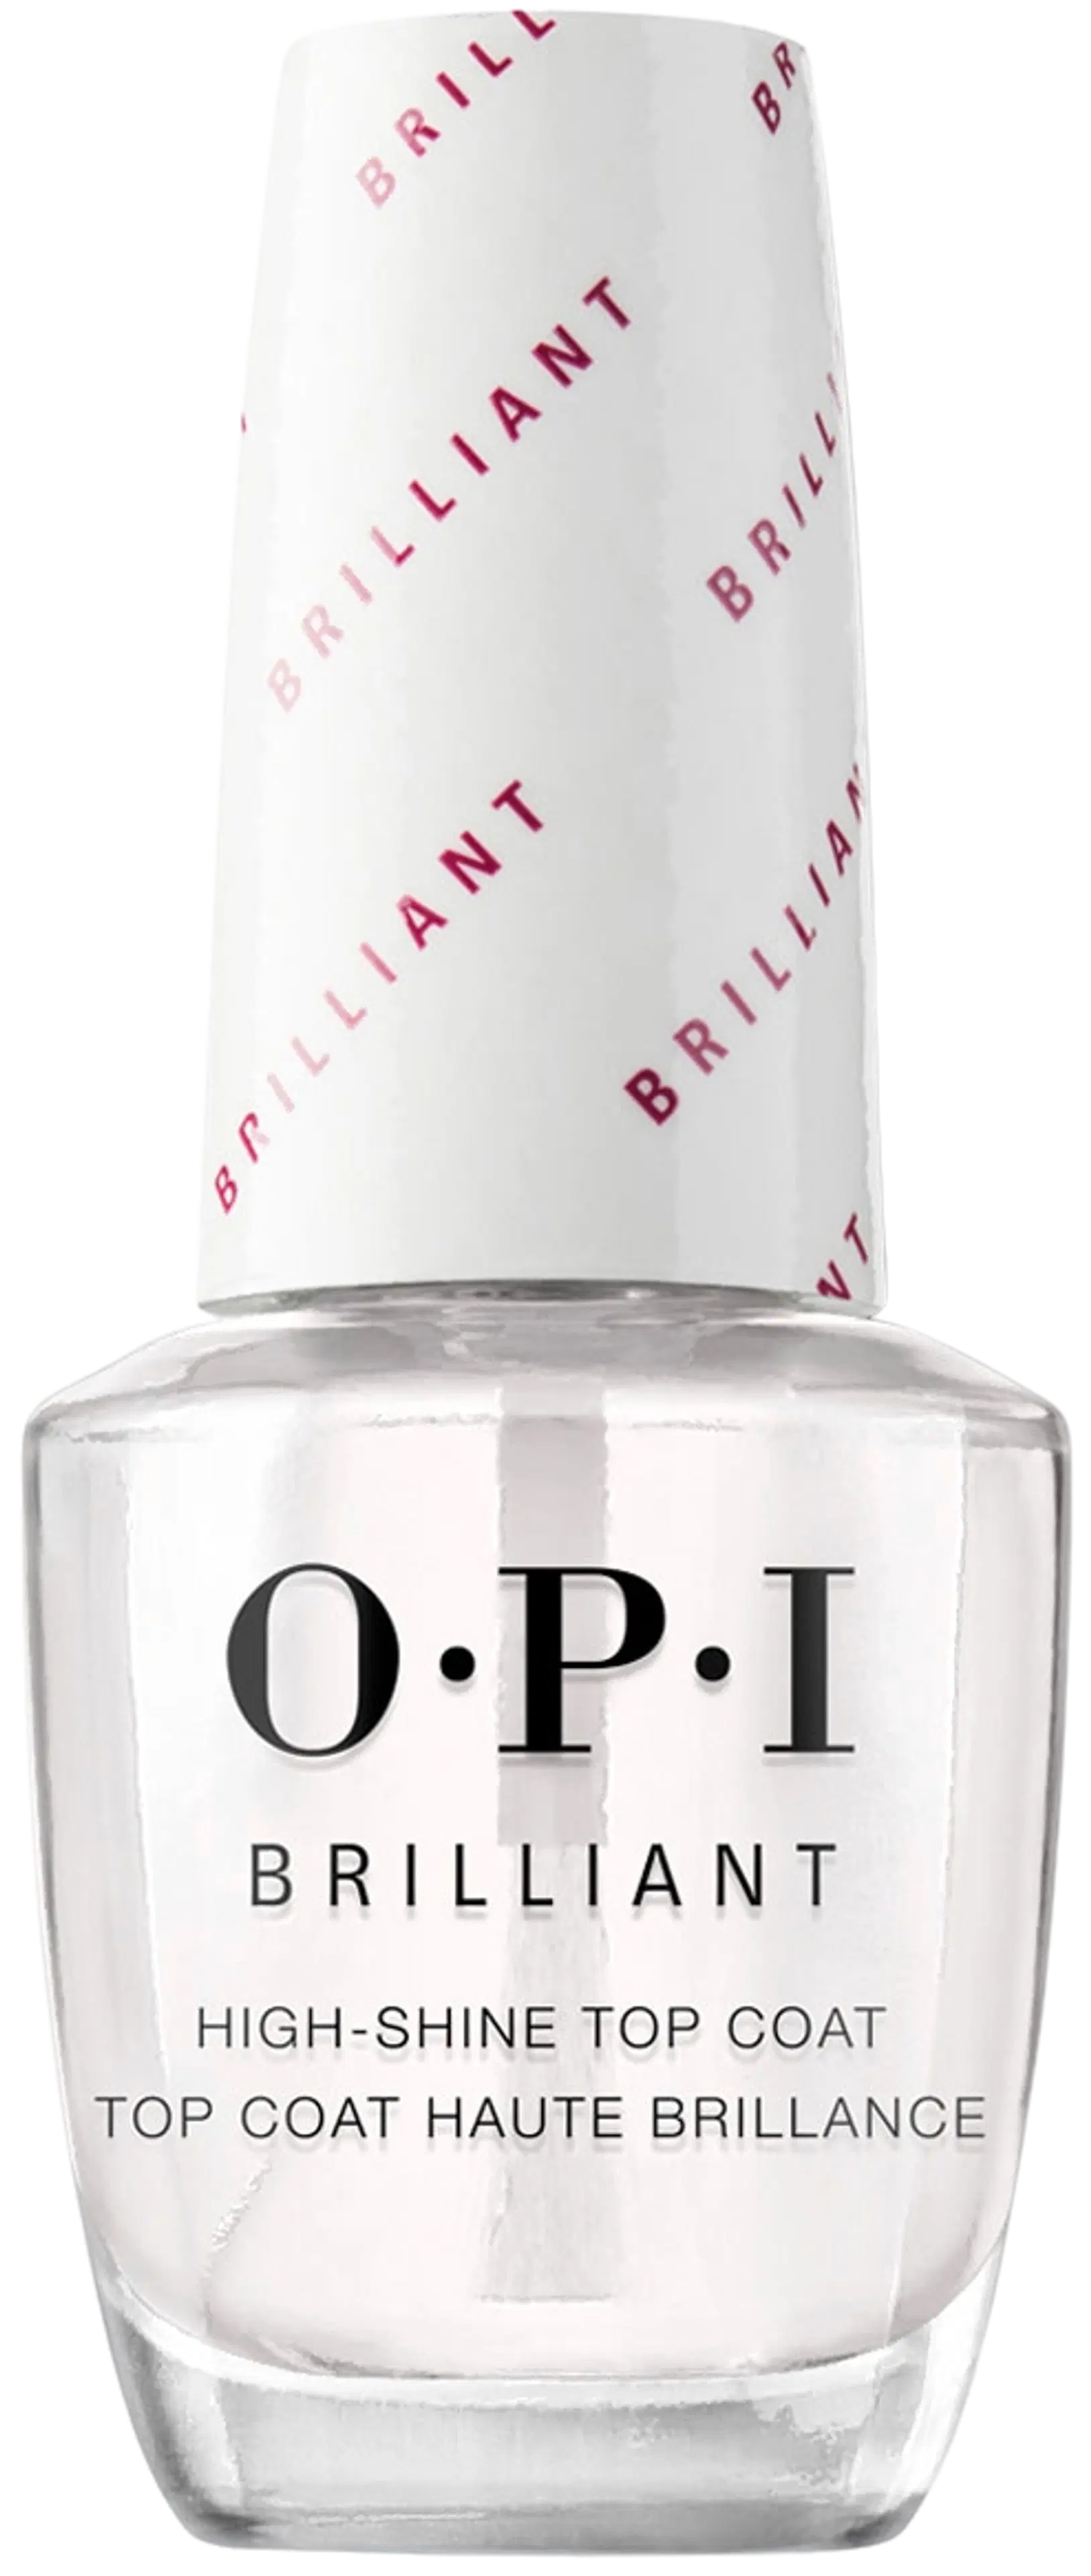 OPI Brilliant High-Shine Top Coat päällyslakka 15 ml